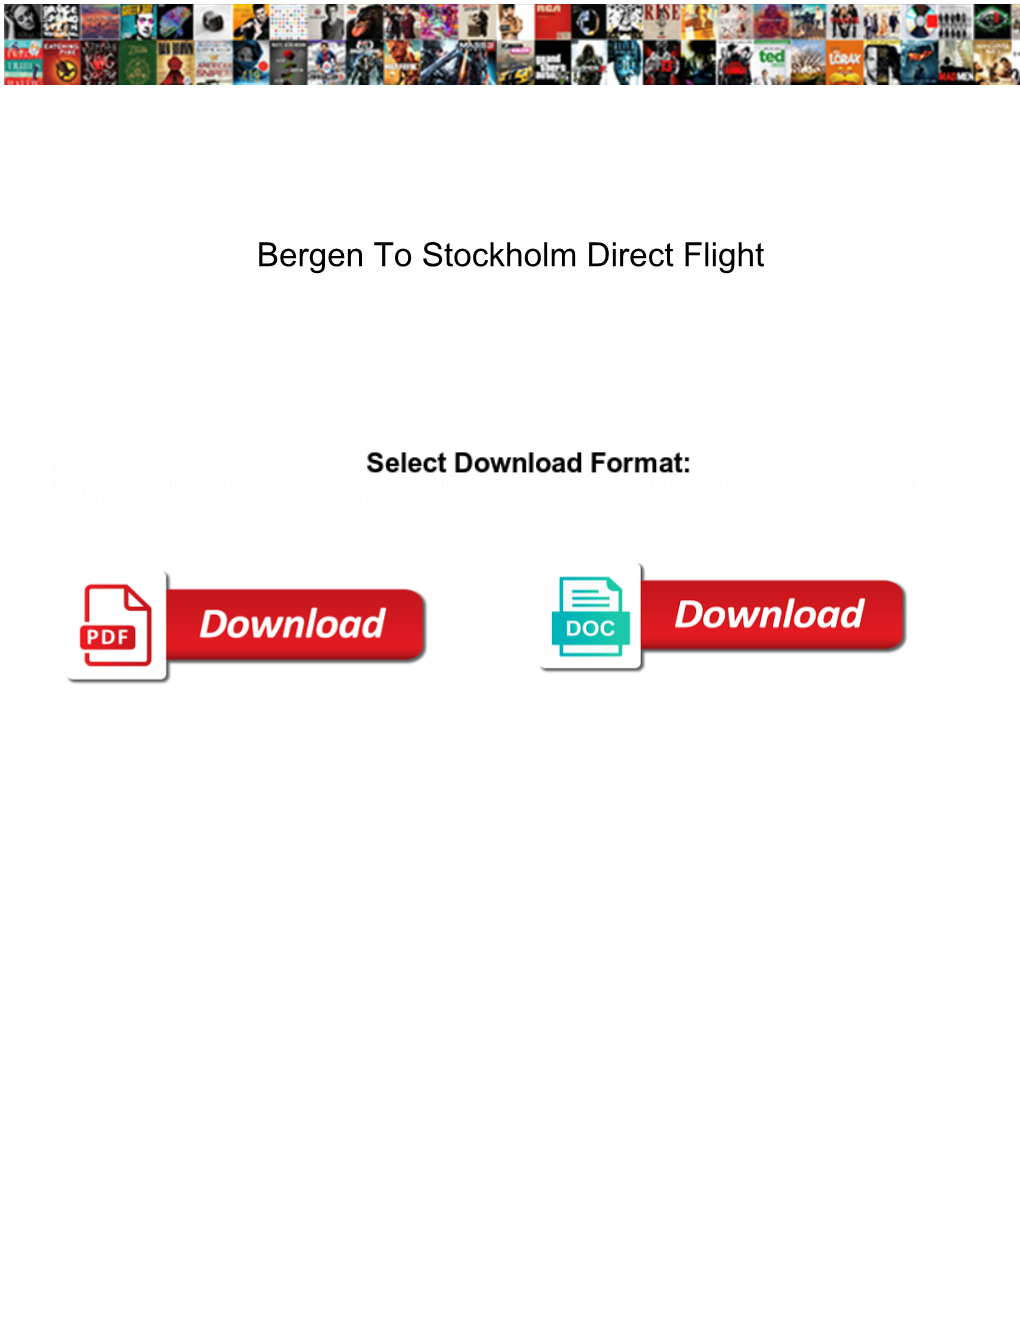 Bergen to Stockholm Direct Flight